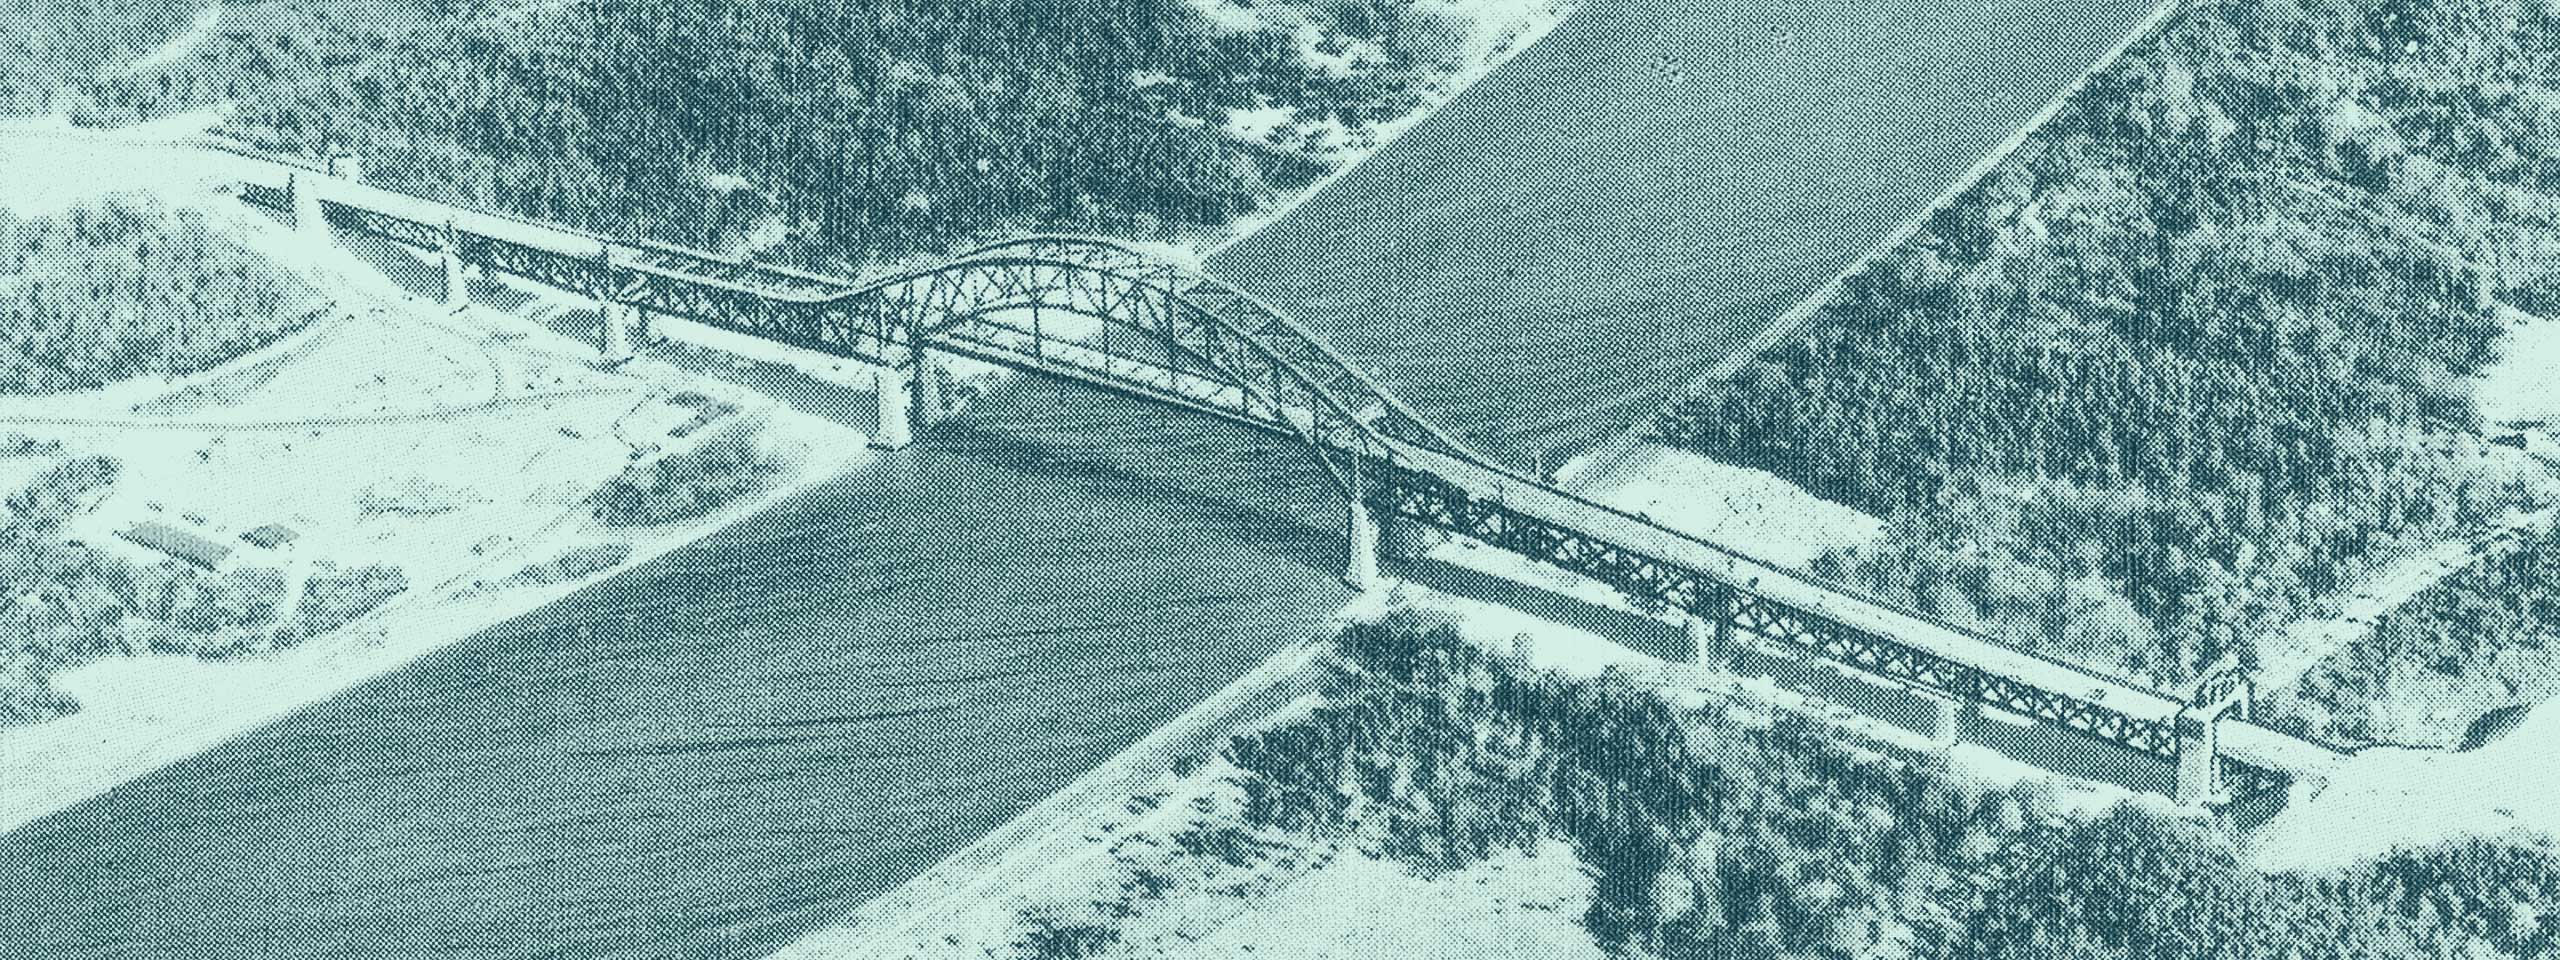 Vintage image of the Bourne Bridge